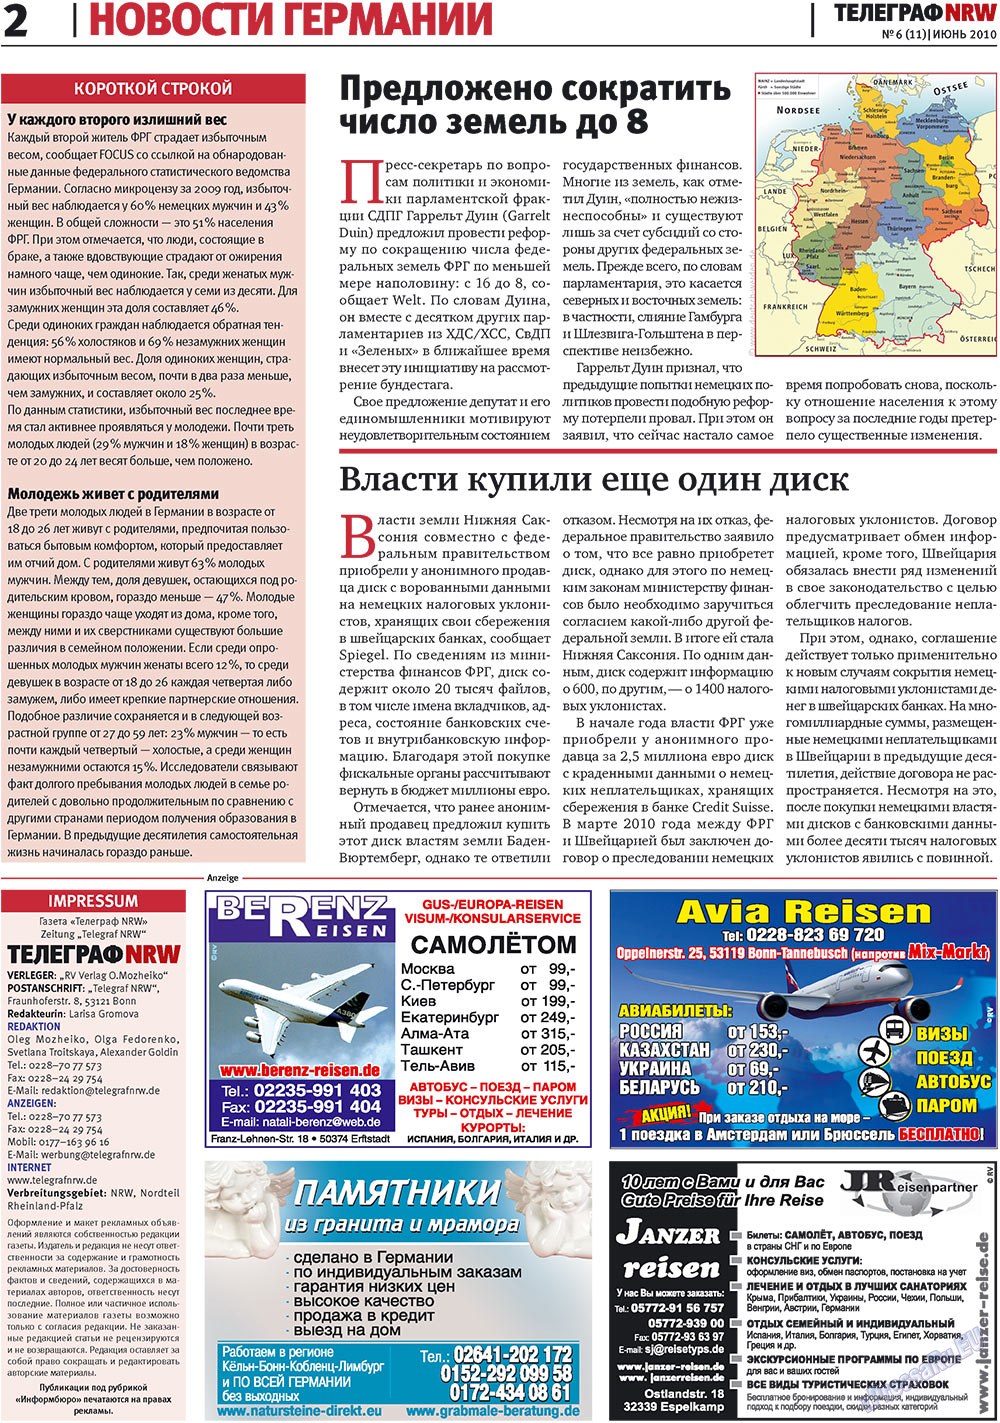 Телеграф NRW, газета. 2010 №6 стр.2